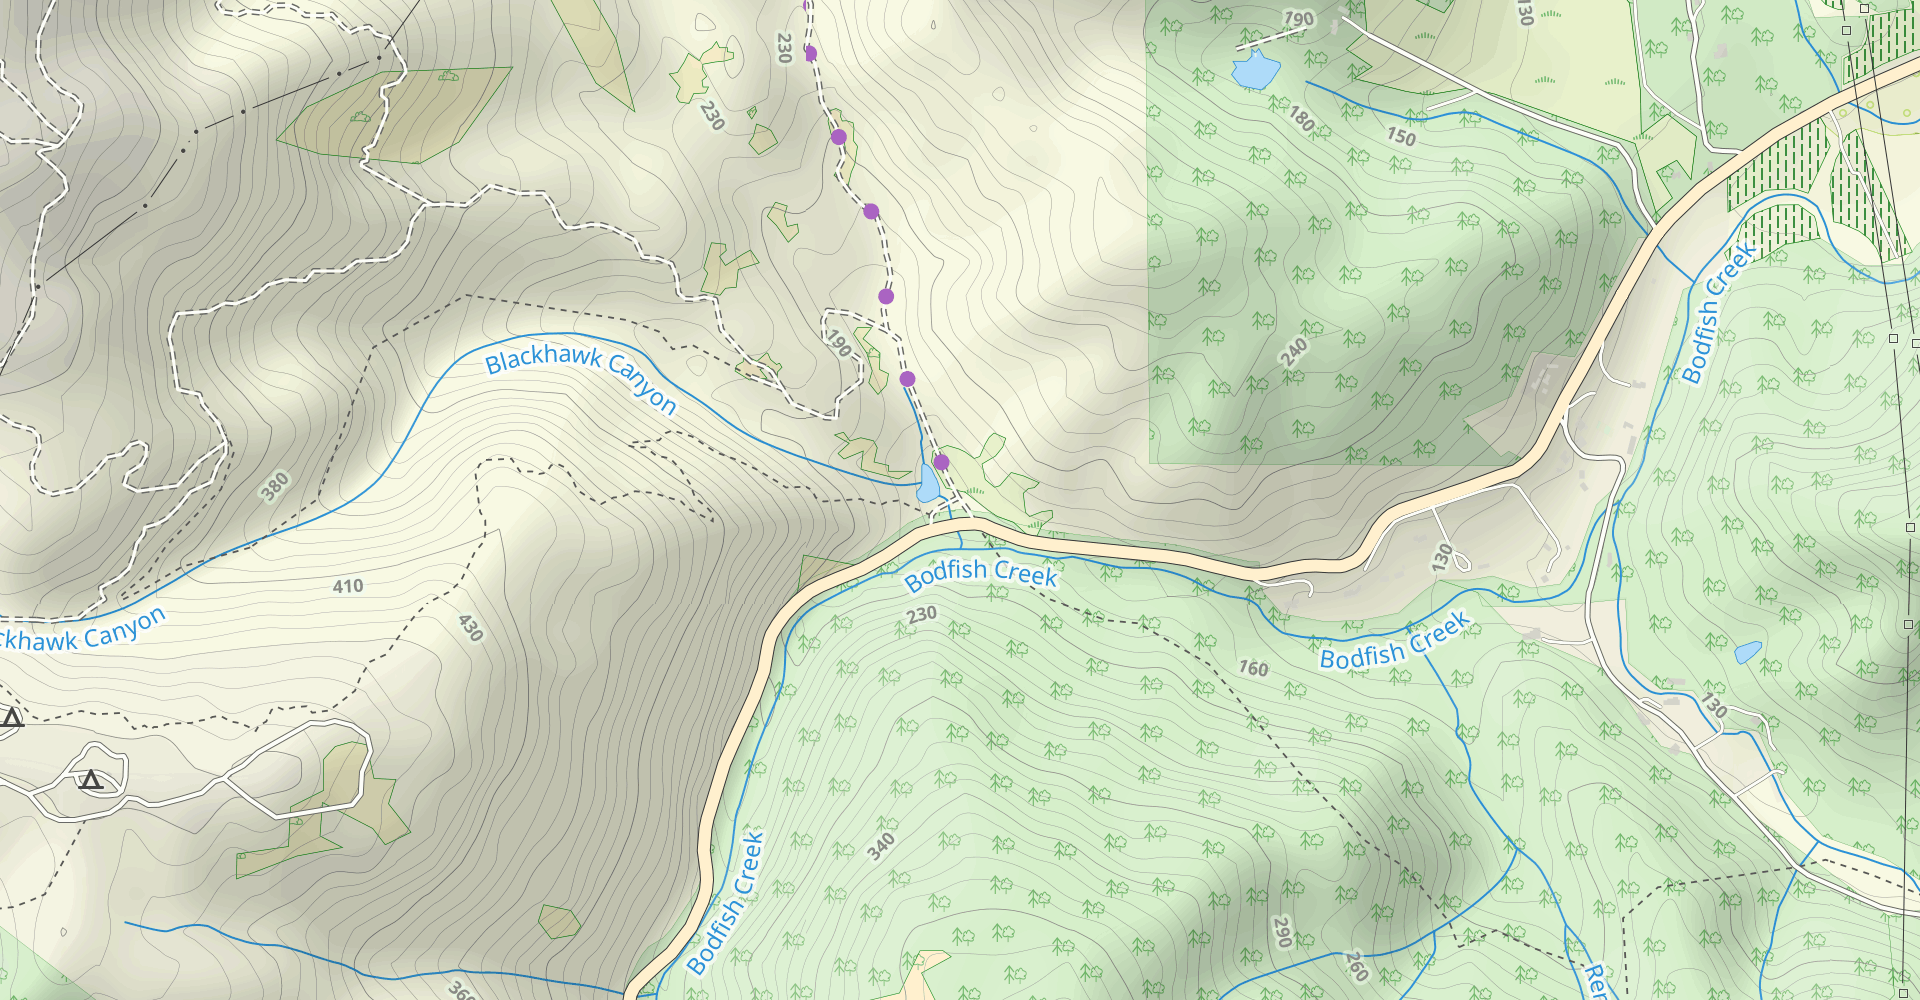 Sprig Trail and Blackhawk Canyon Loop